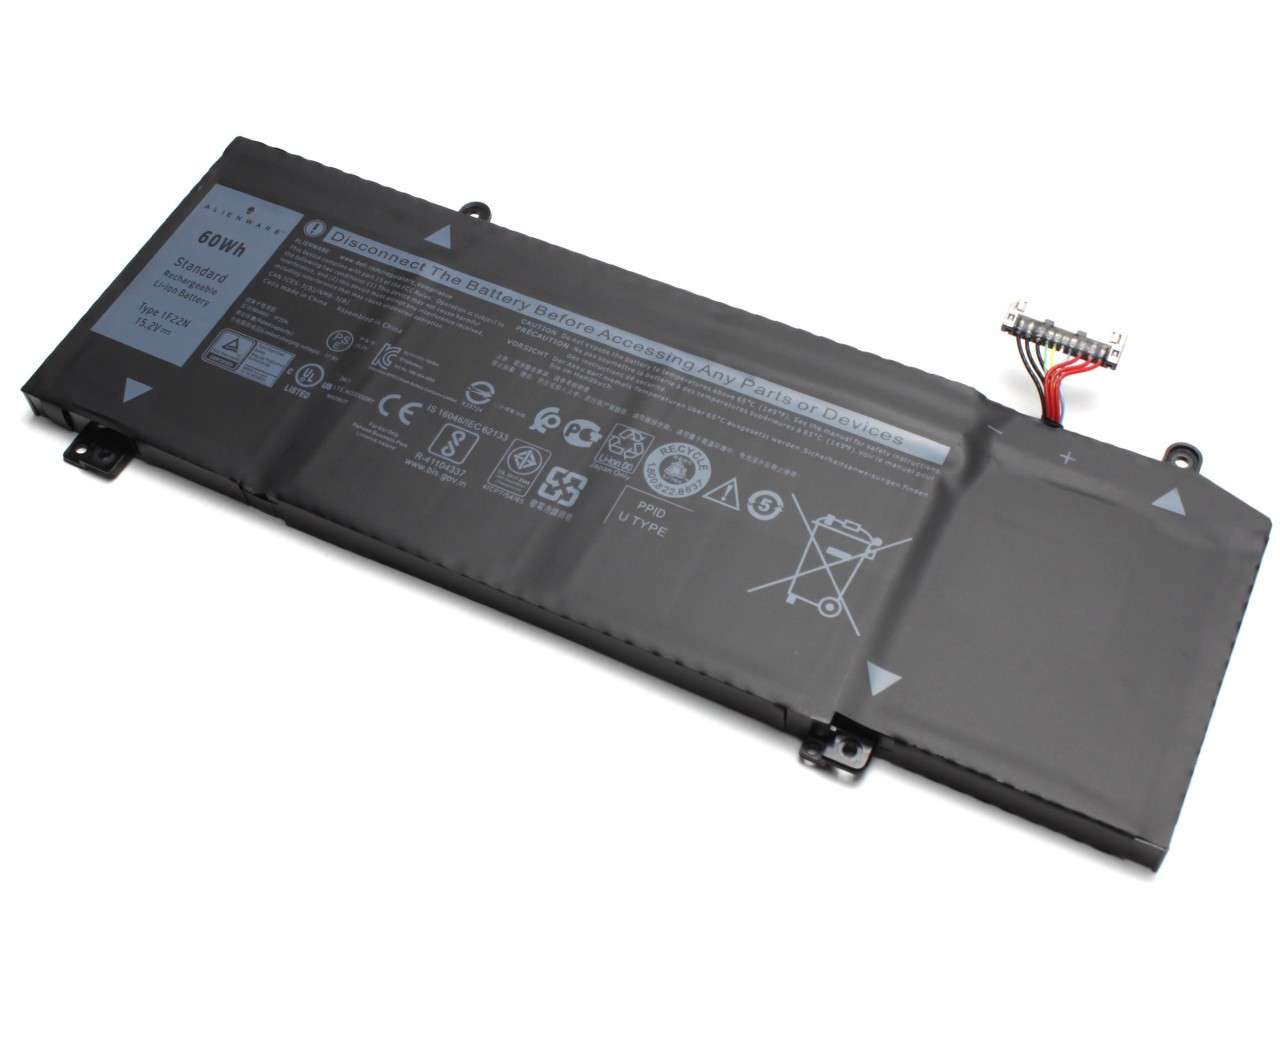 Baterie Dell G7 7590 Originala 60Wh imagine powerlaptop.ro 2021